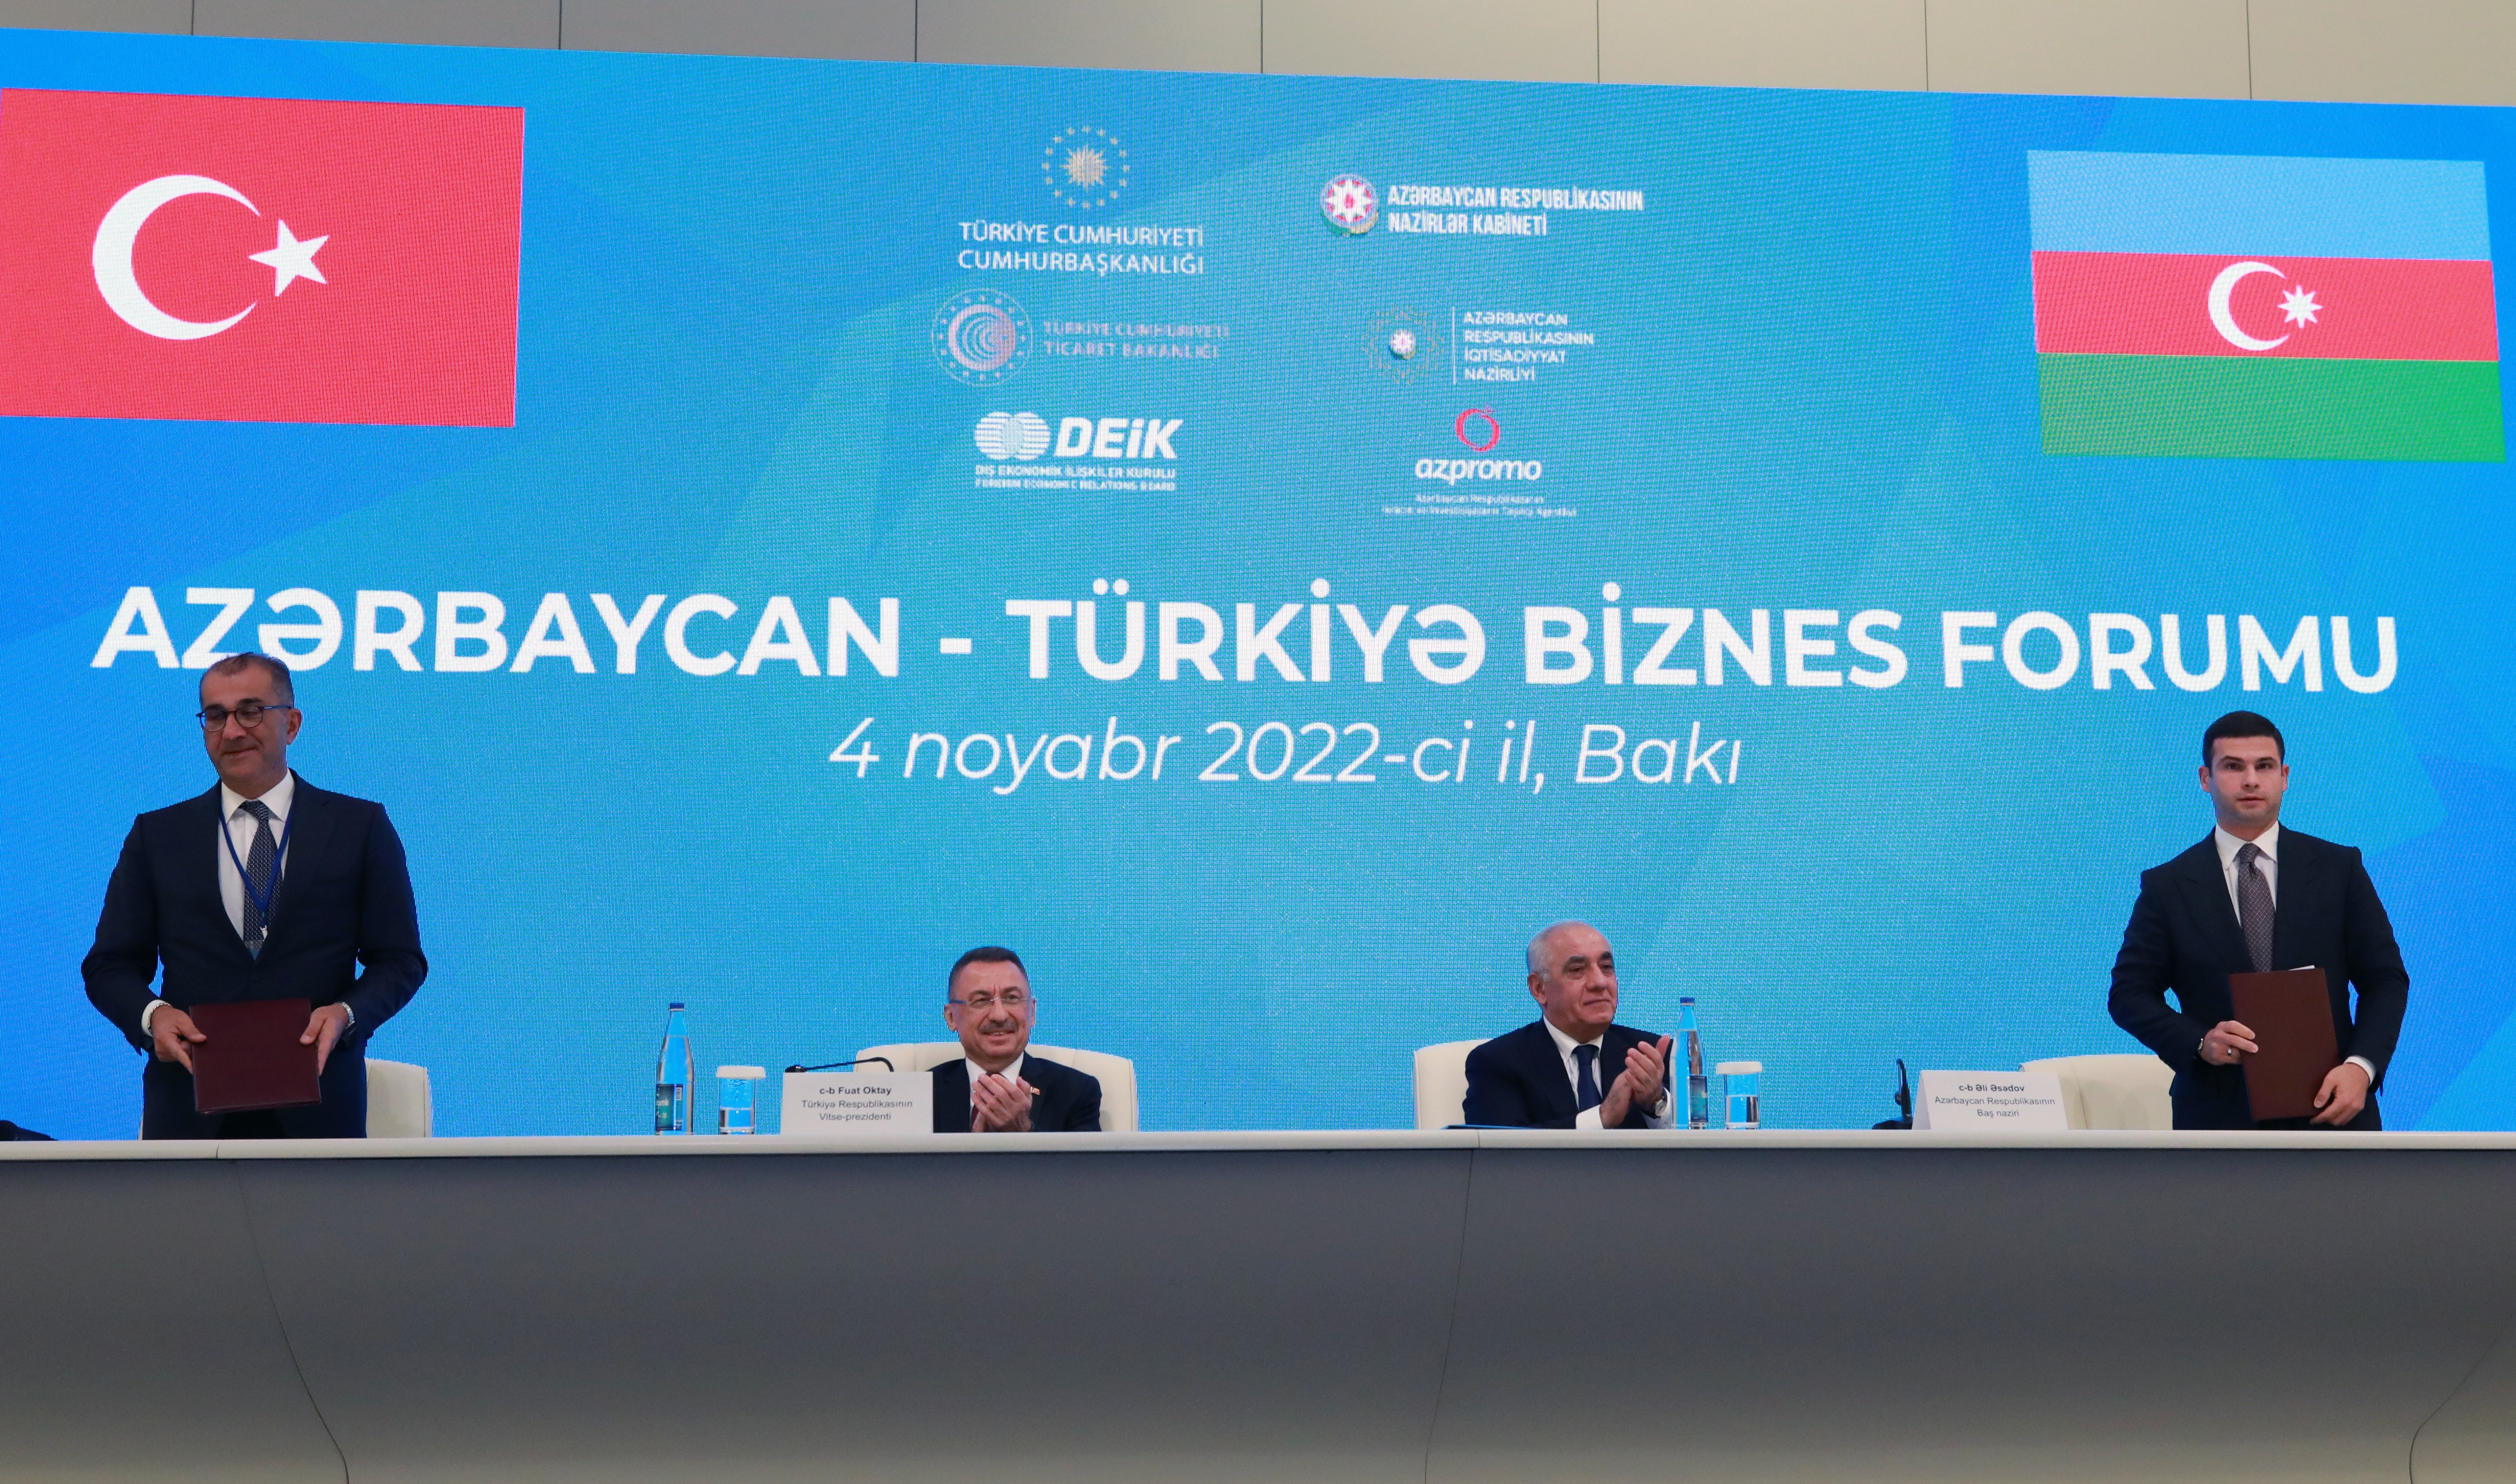 KOBİA подписала два документа в рамках азербайджано-турецкого бизнес-форума 